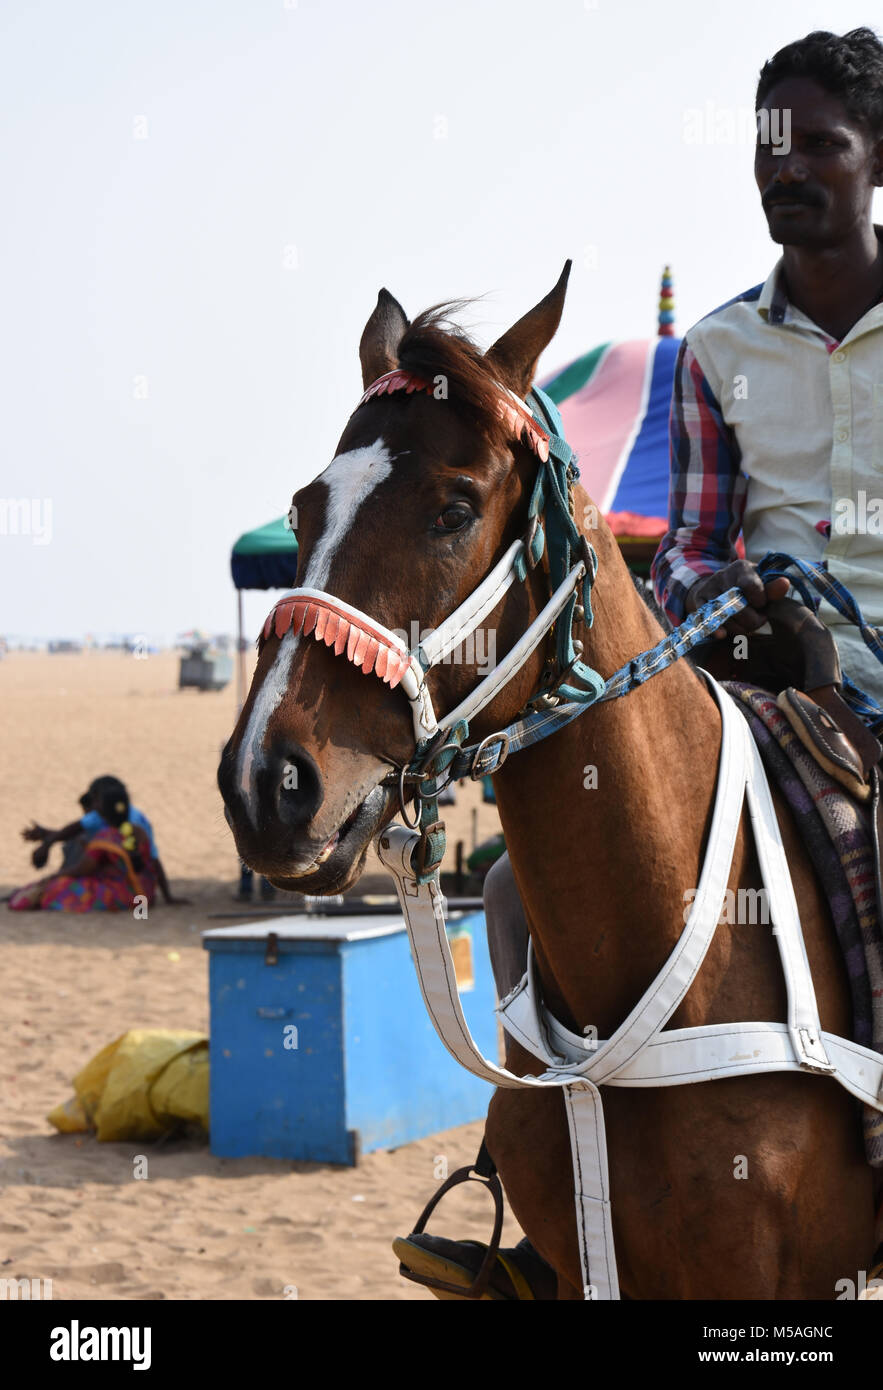 Freude Reiten Reiten am Strand, Chennai, Indien Stockfoto